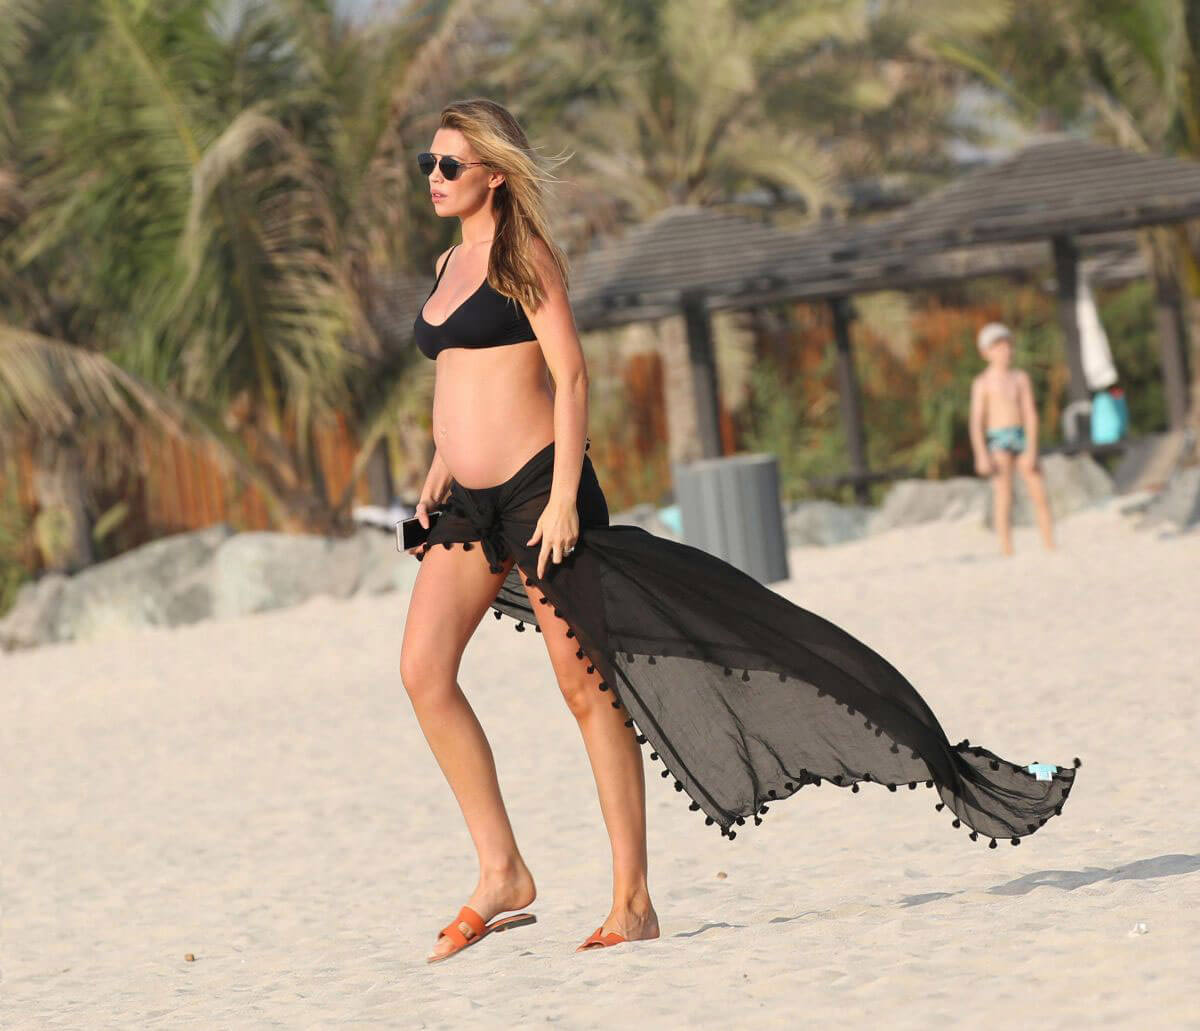 Pregnant Abigail Abbey Clancy Stills in Bikini on the Beach in Dubai